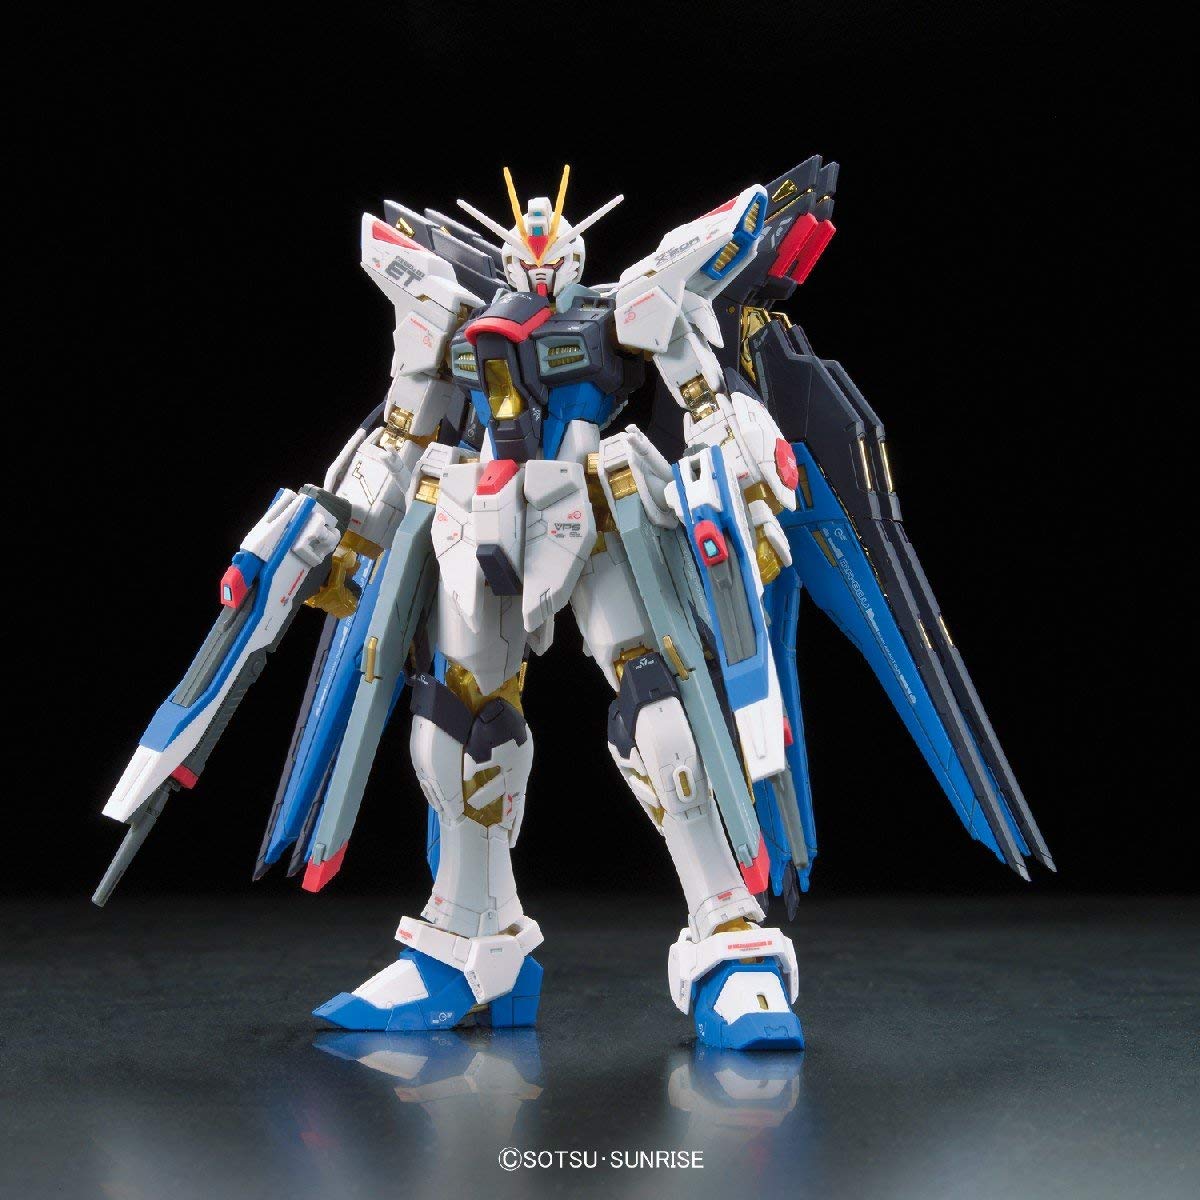 RG 1/144 ZGMF-X20A ストライクフリーダムガンダム [Strike Freedom Gundam] 0185139 4543112851390 5061617 4573102616173